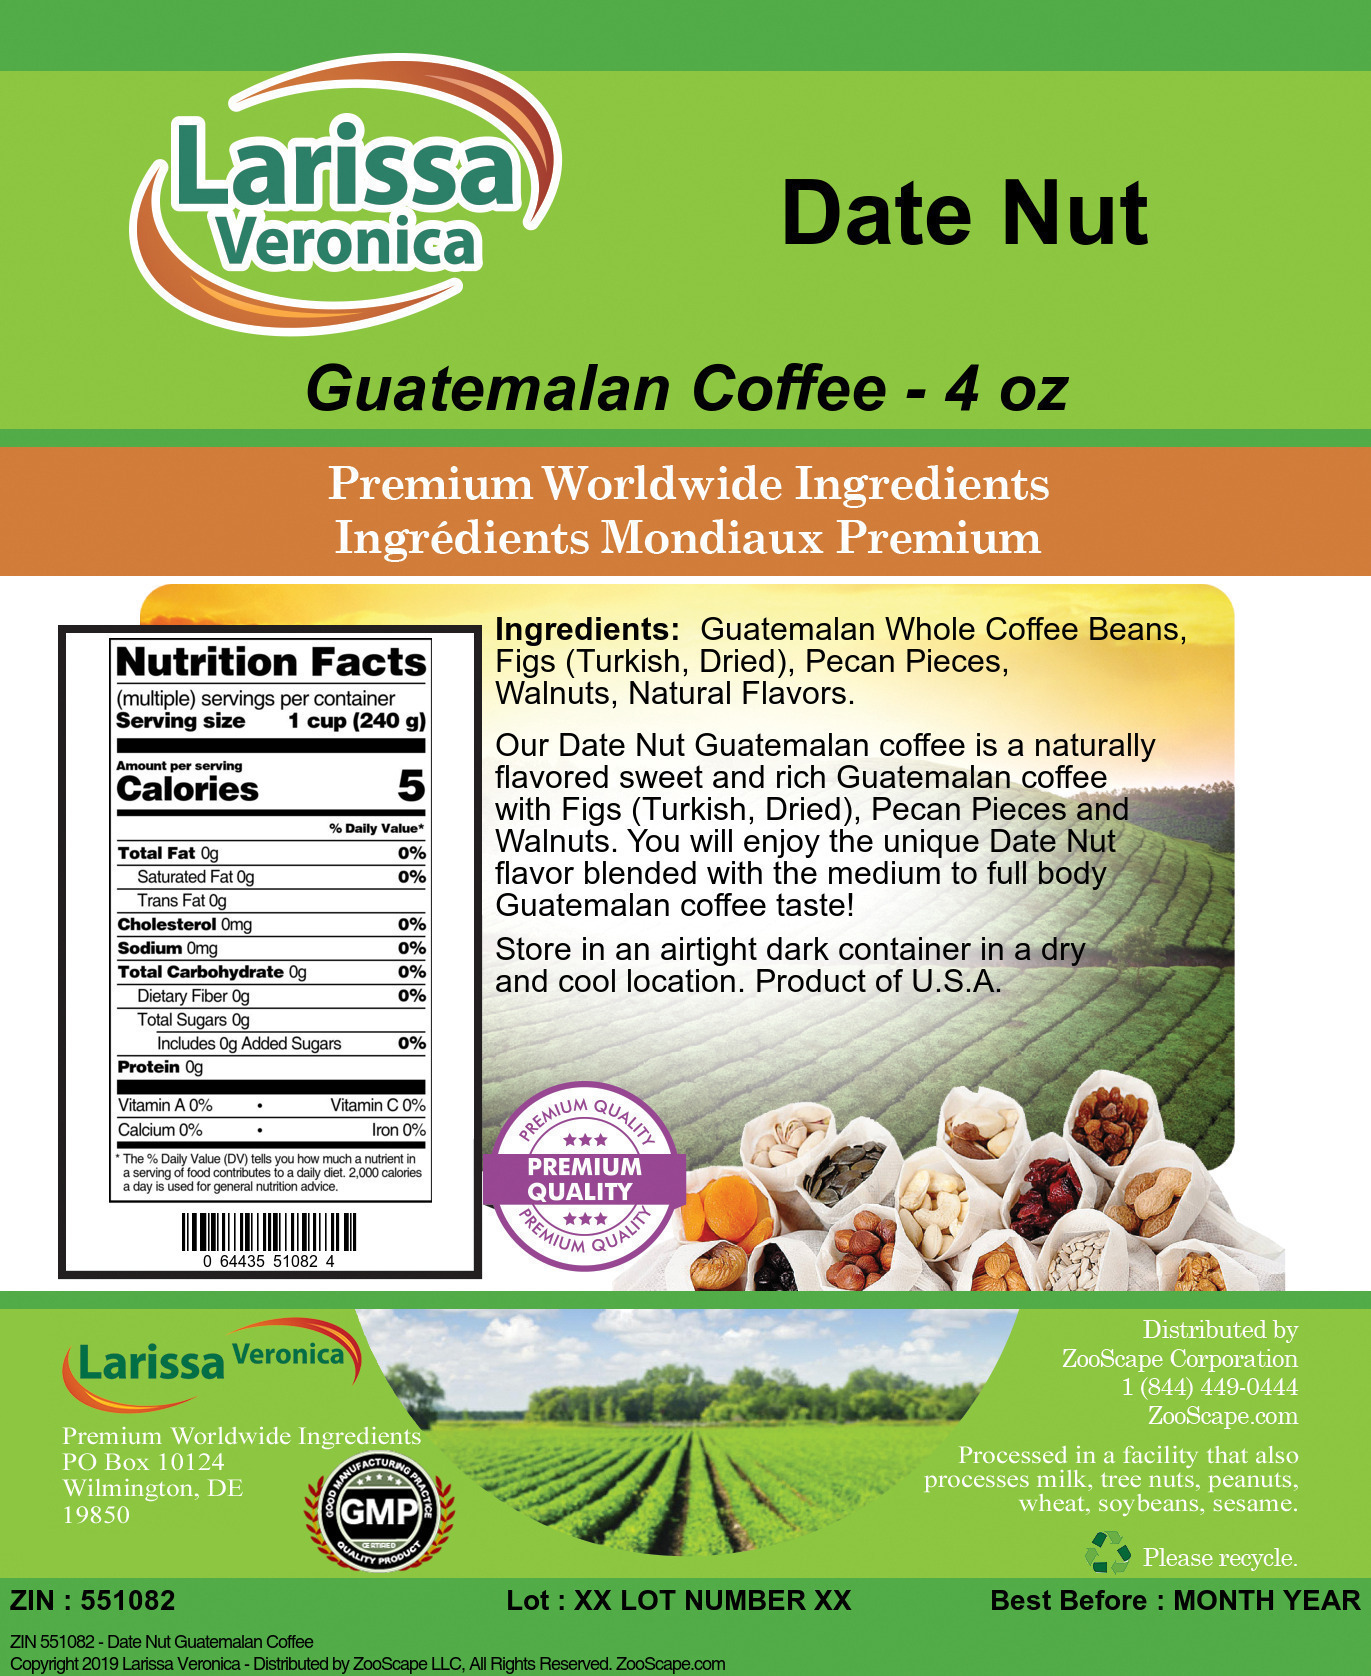 Date Nut Guatemalan Coffee - Label